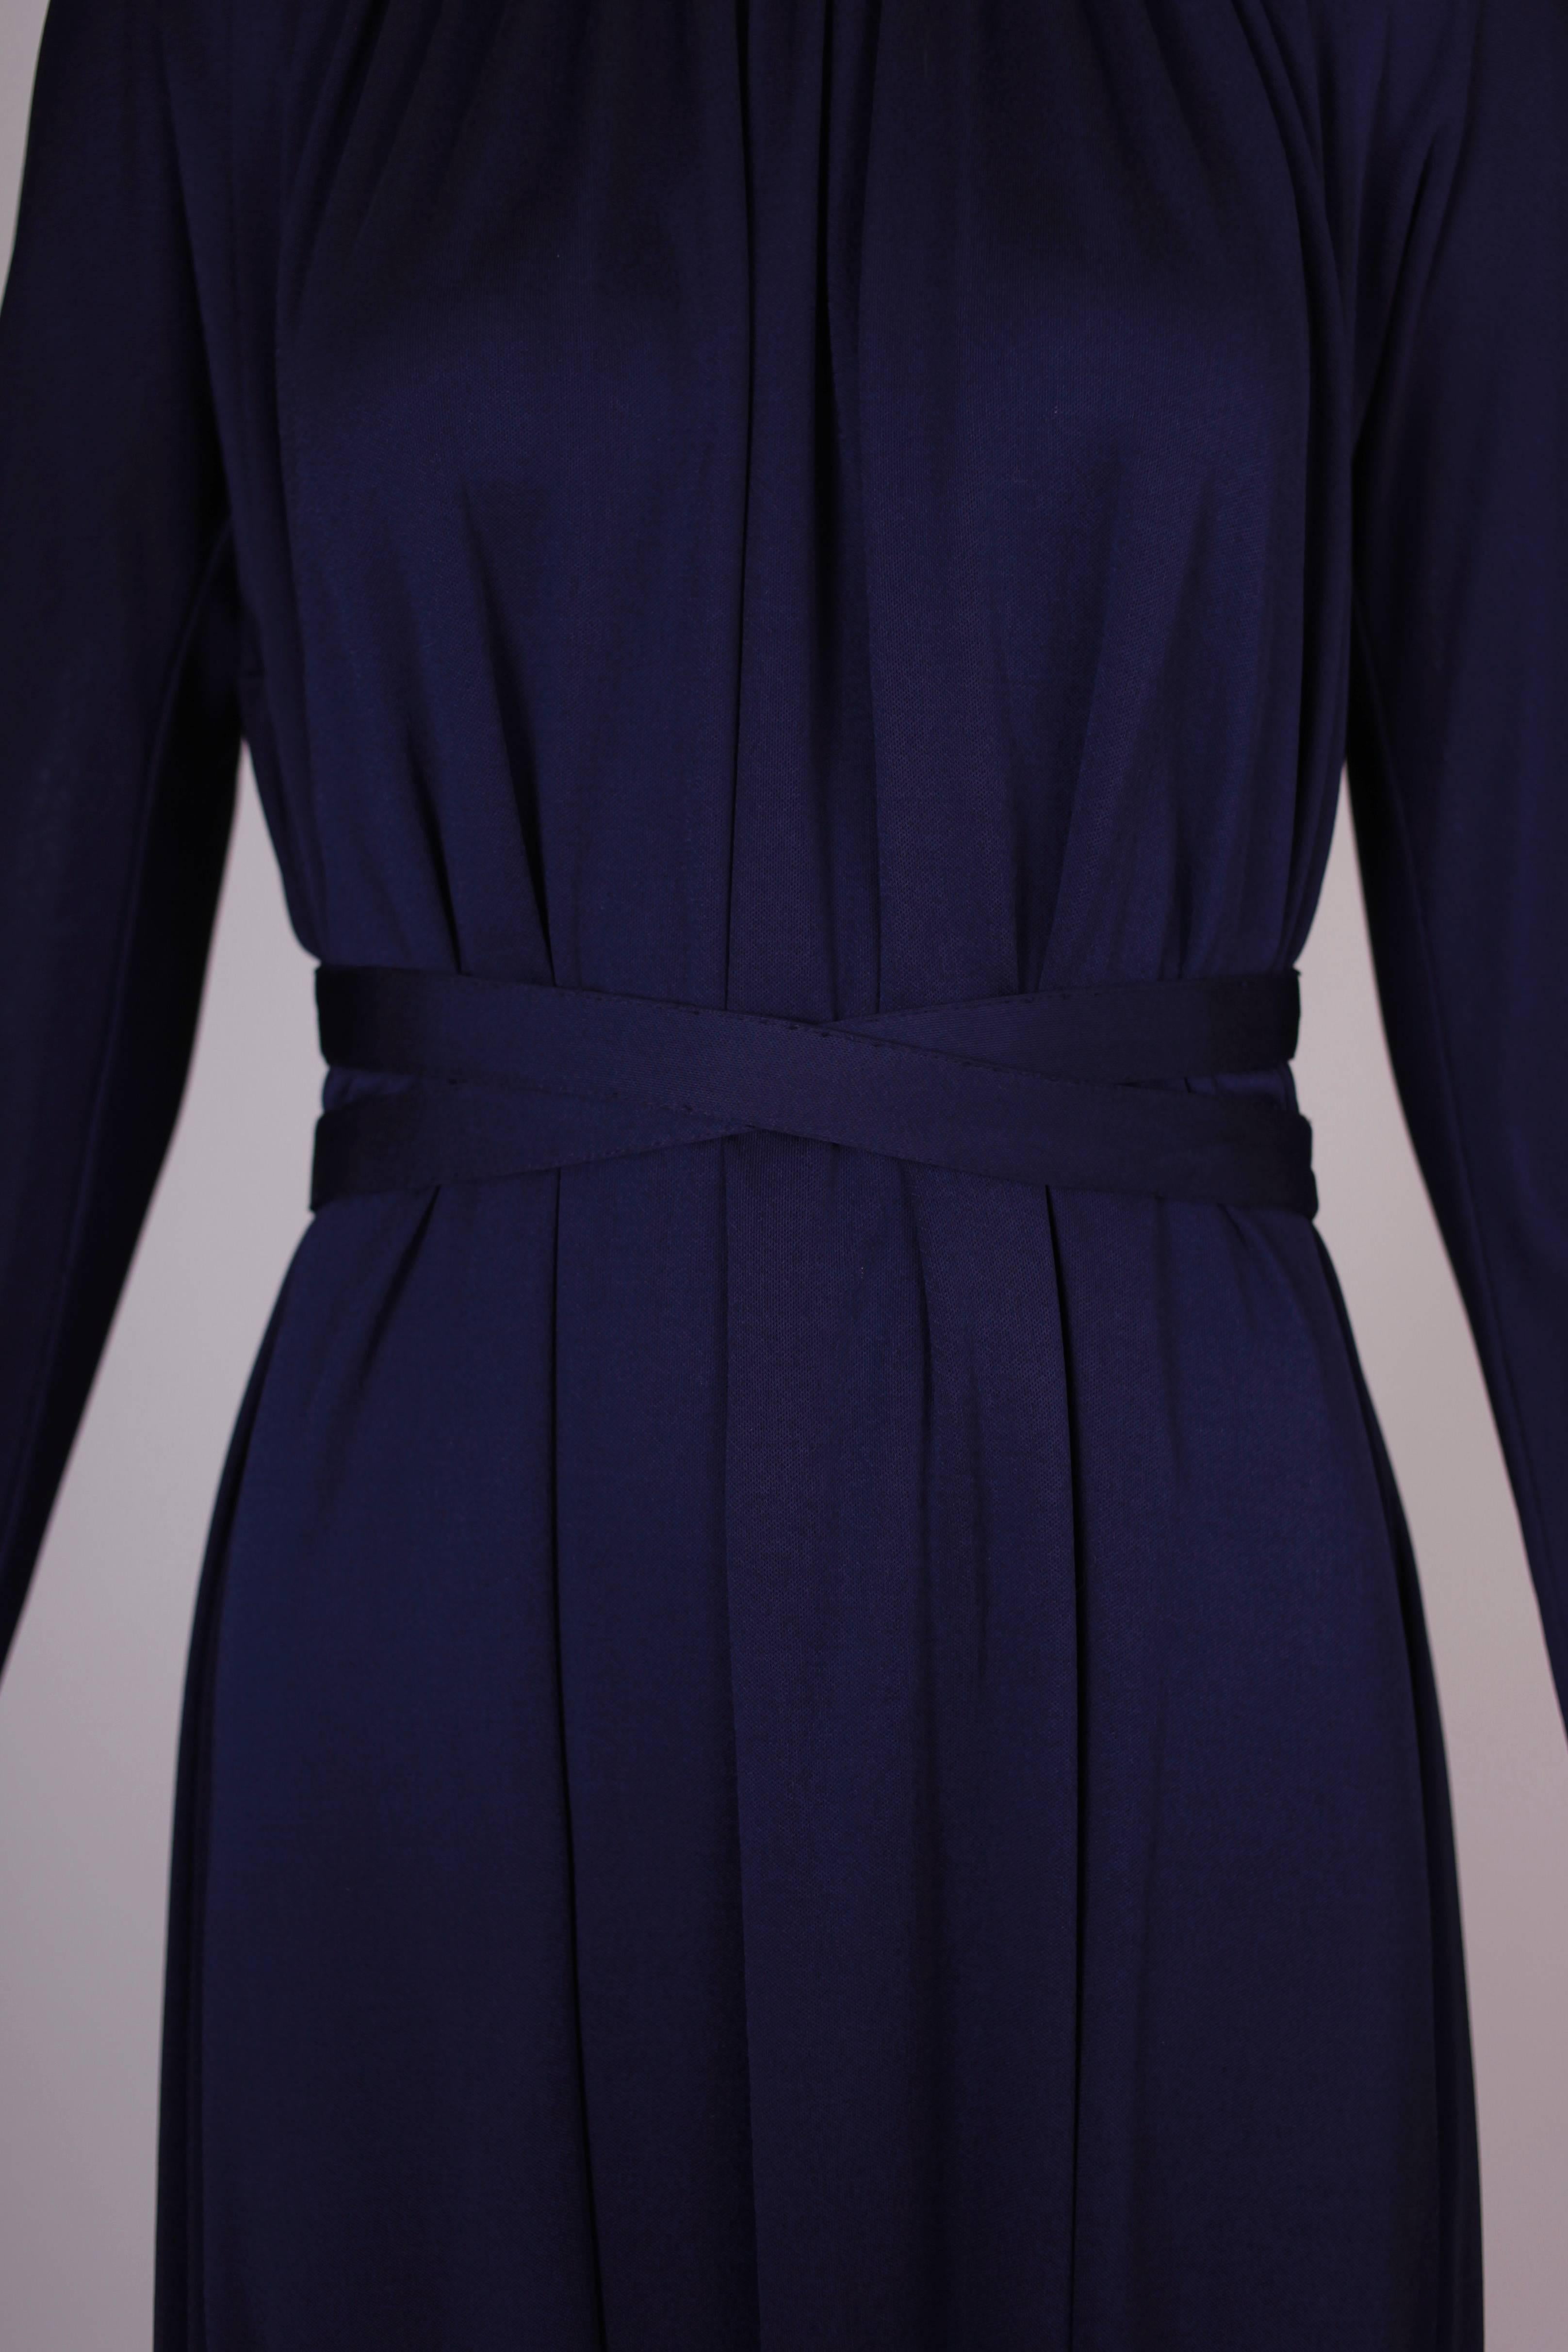 1970s Geoffrey Beene Midnight Blue Silk Jersey Dress w/Waist Ties & Deep V-Neck 1